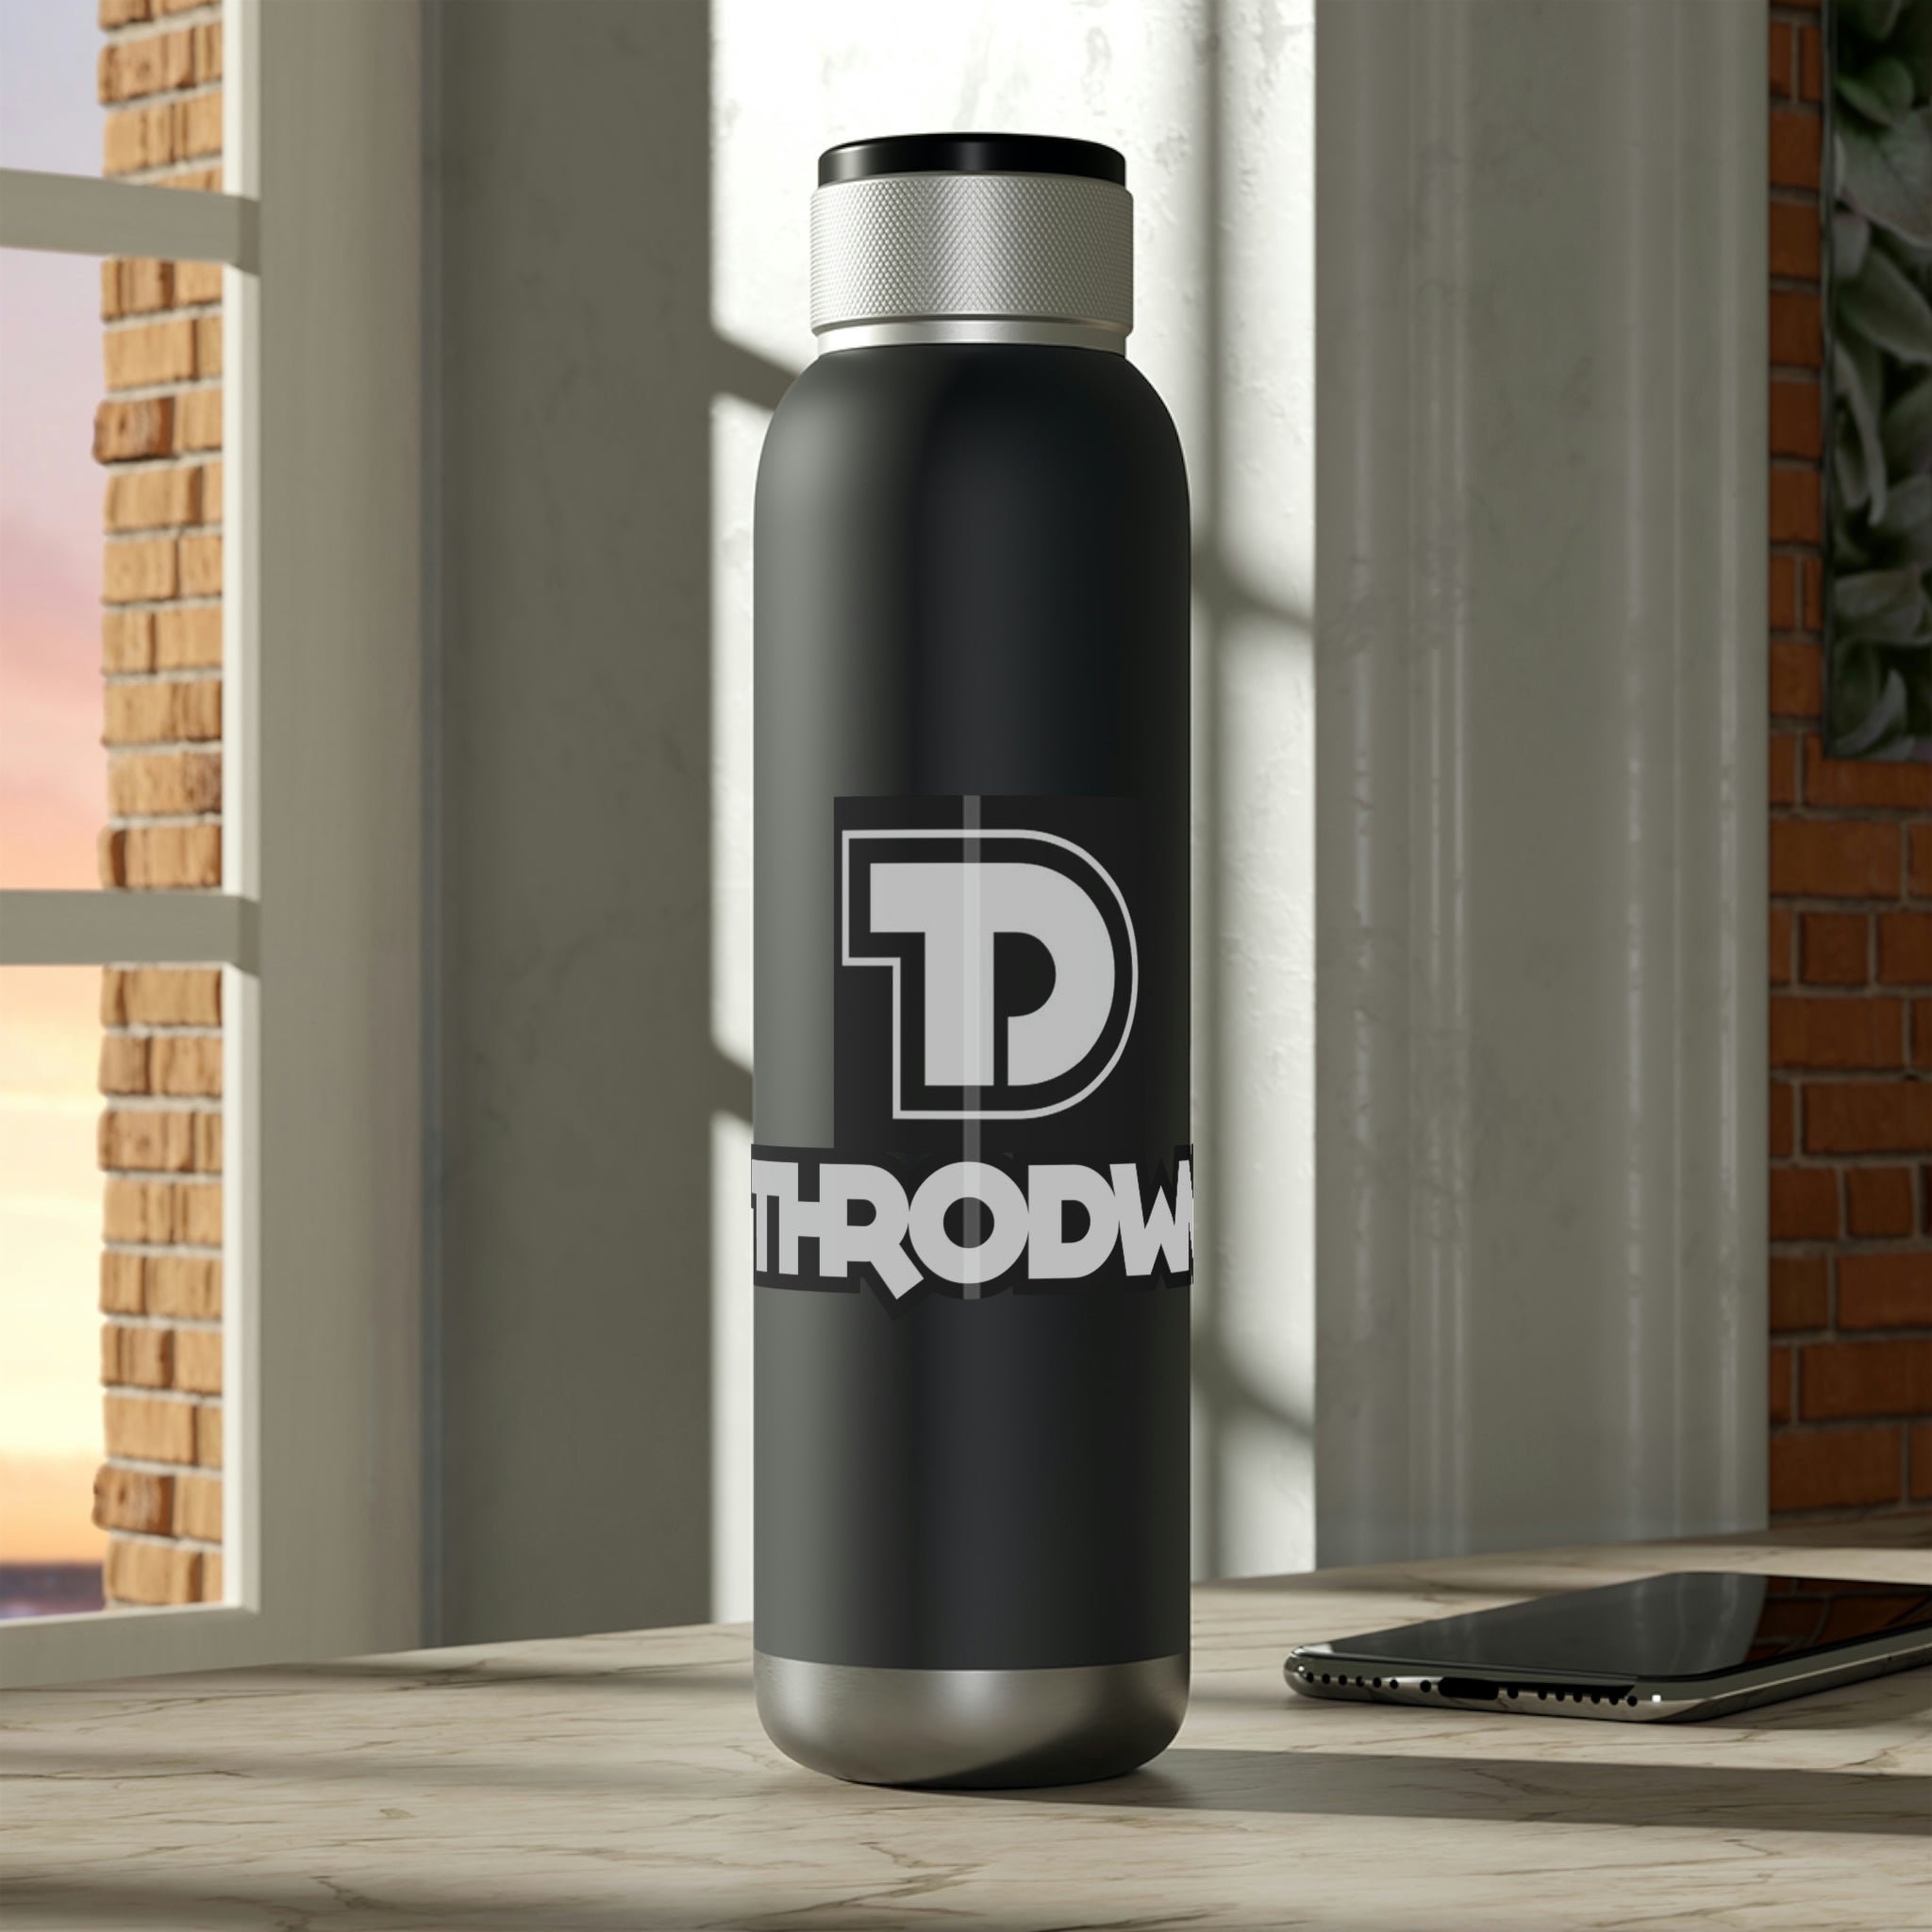 Throdwn Soundwave Audio Water Bottle 22oz